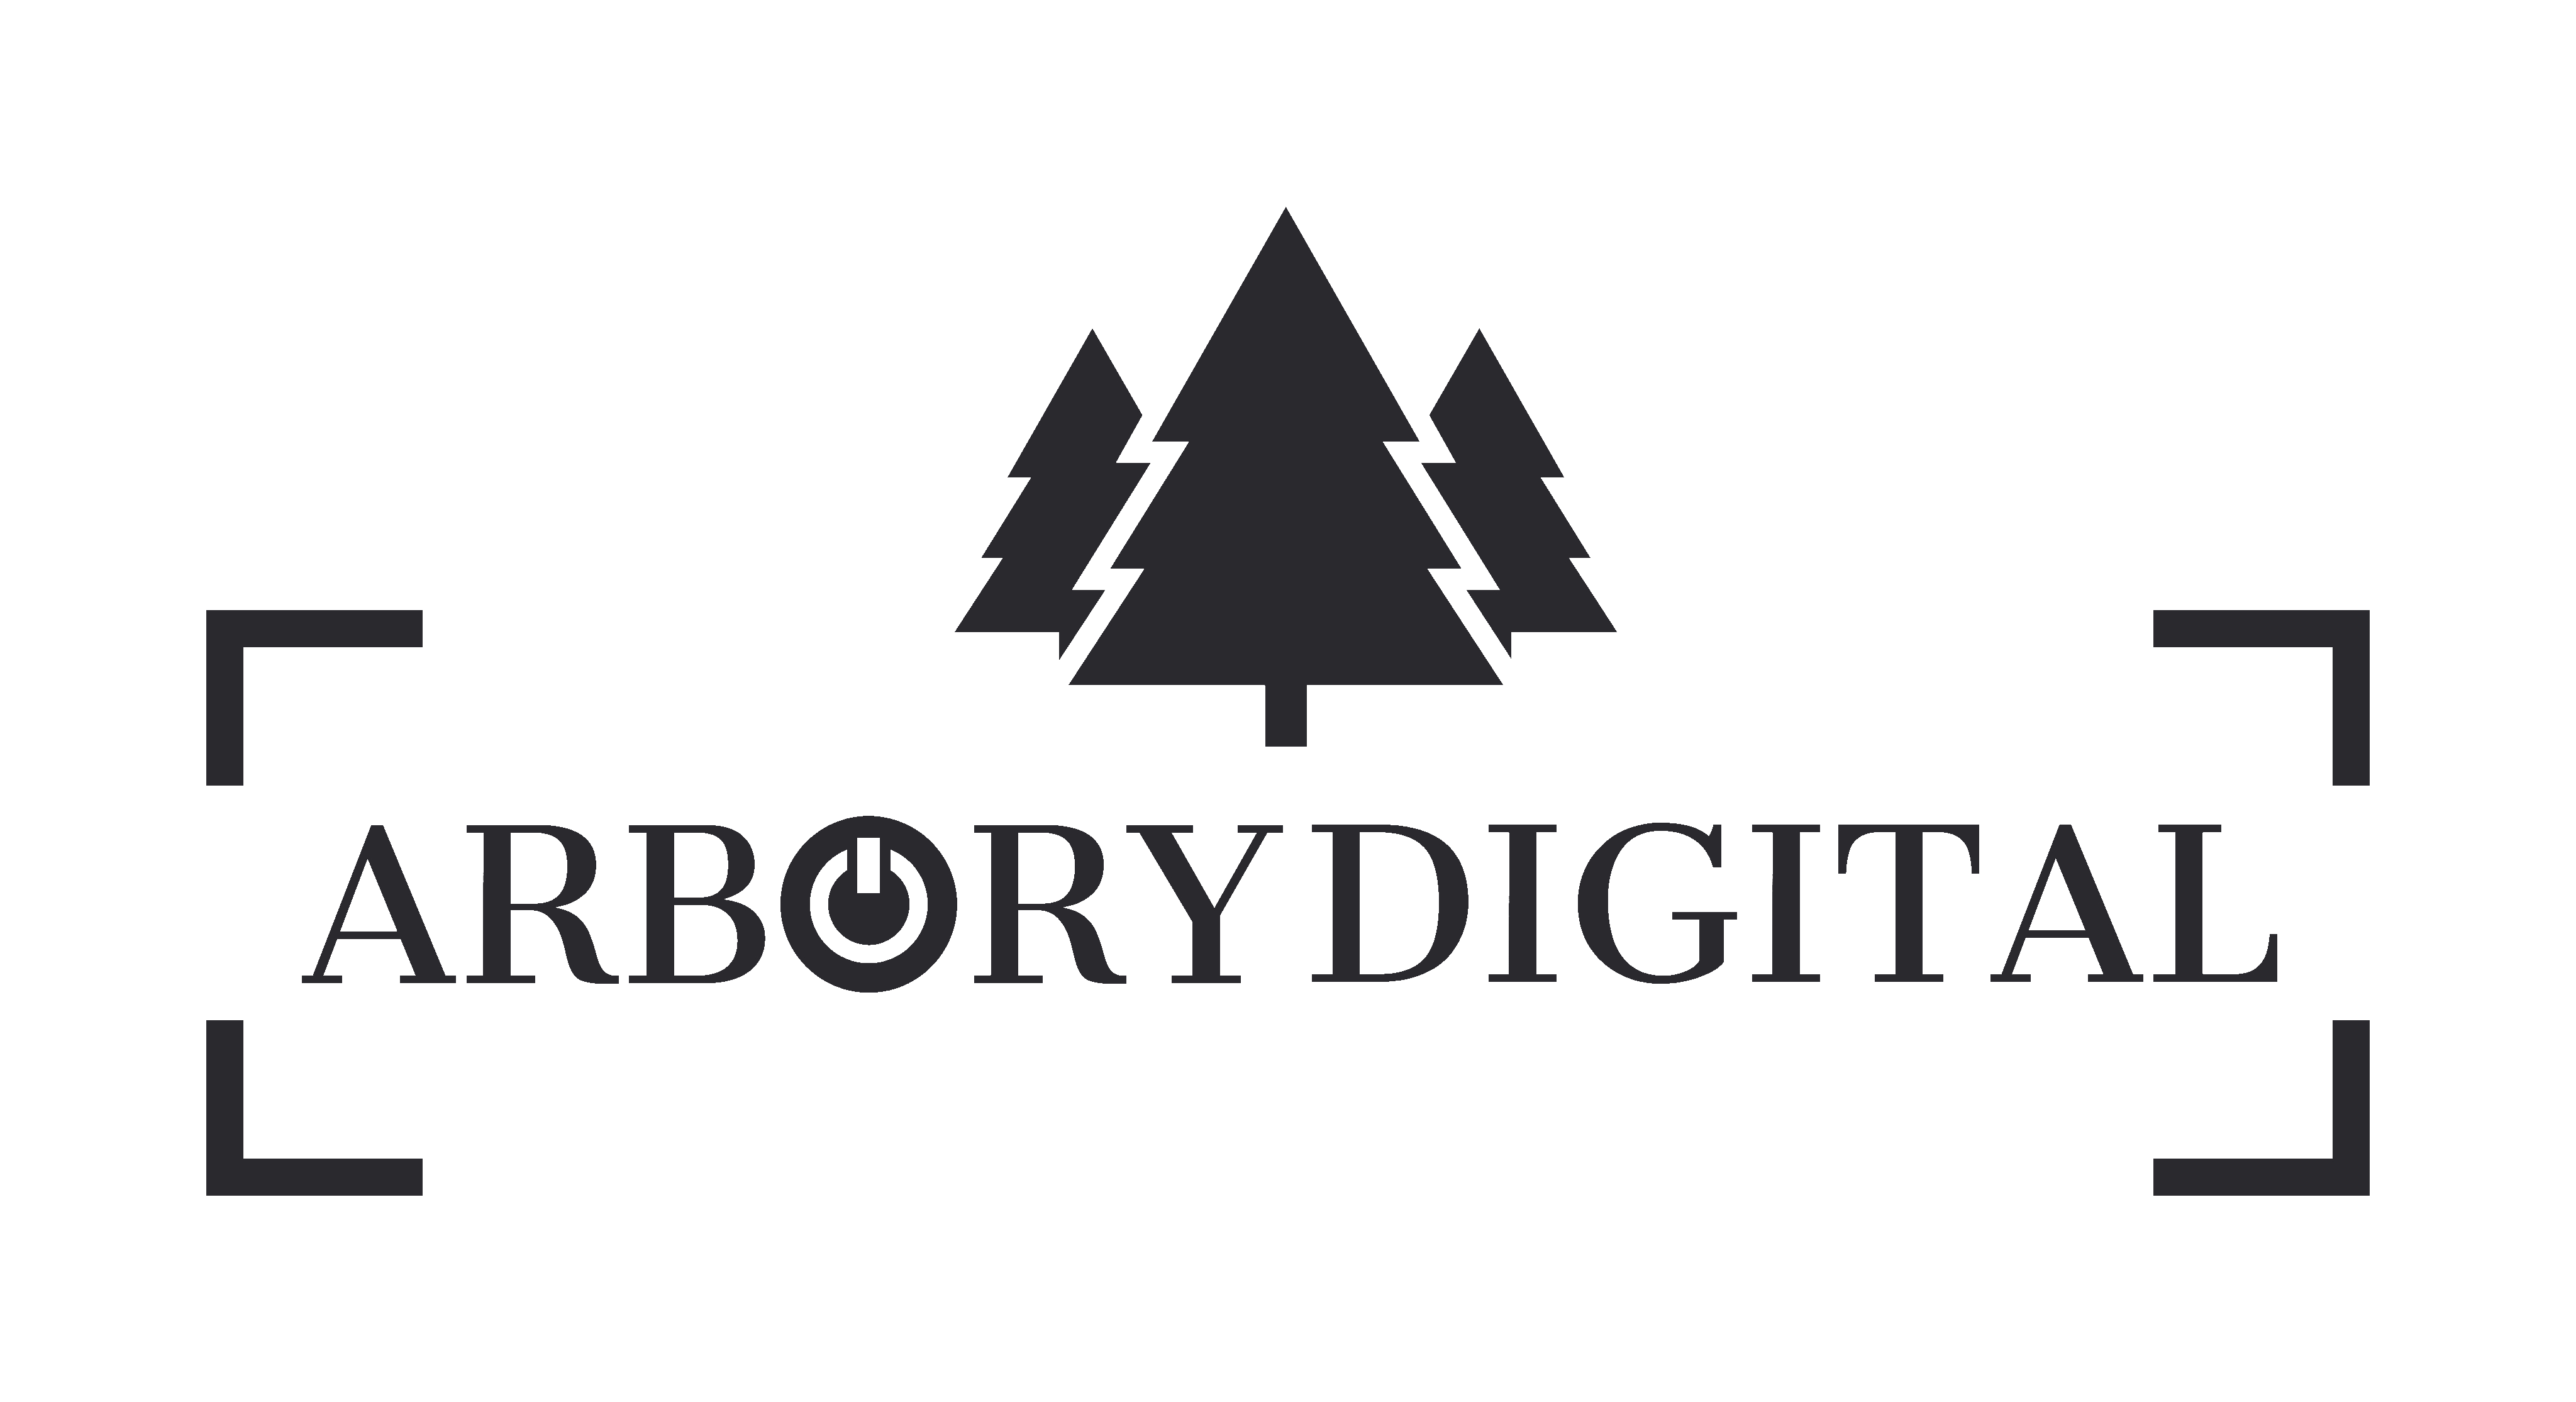 Arbory Digital 